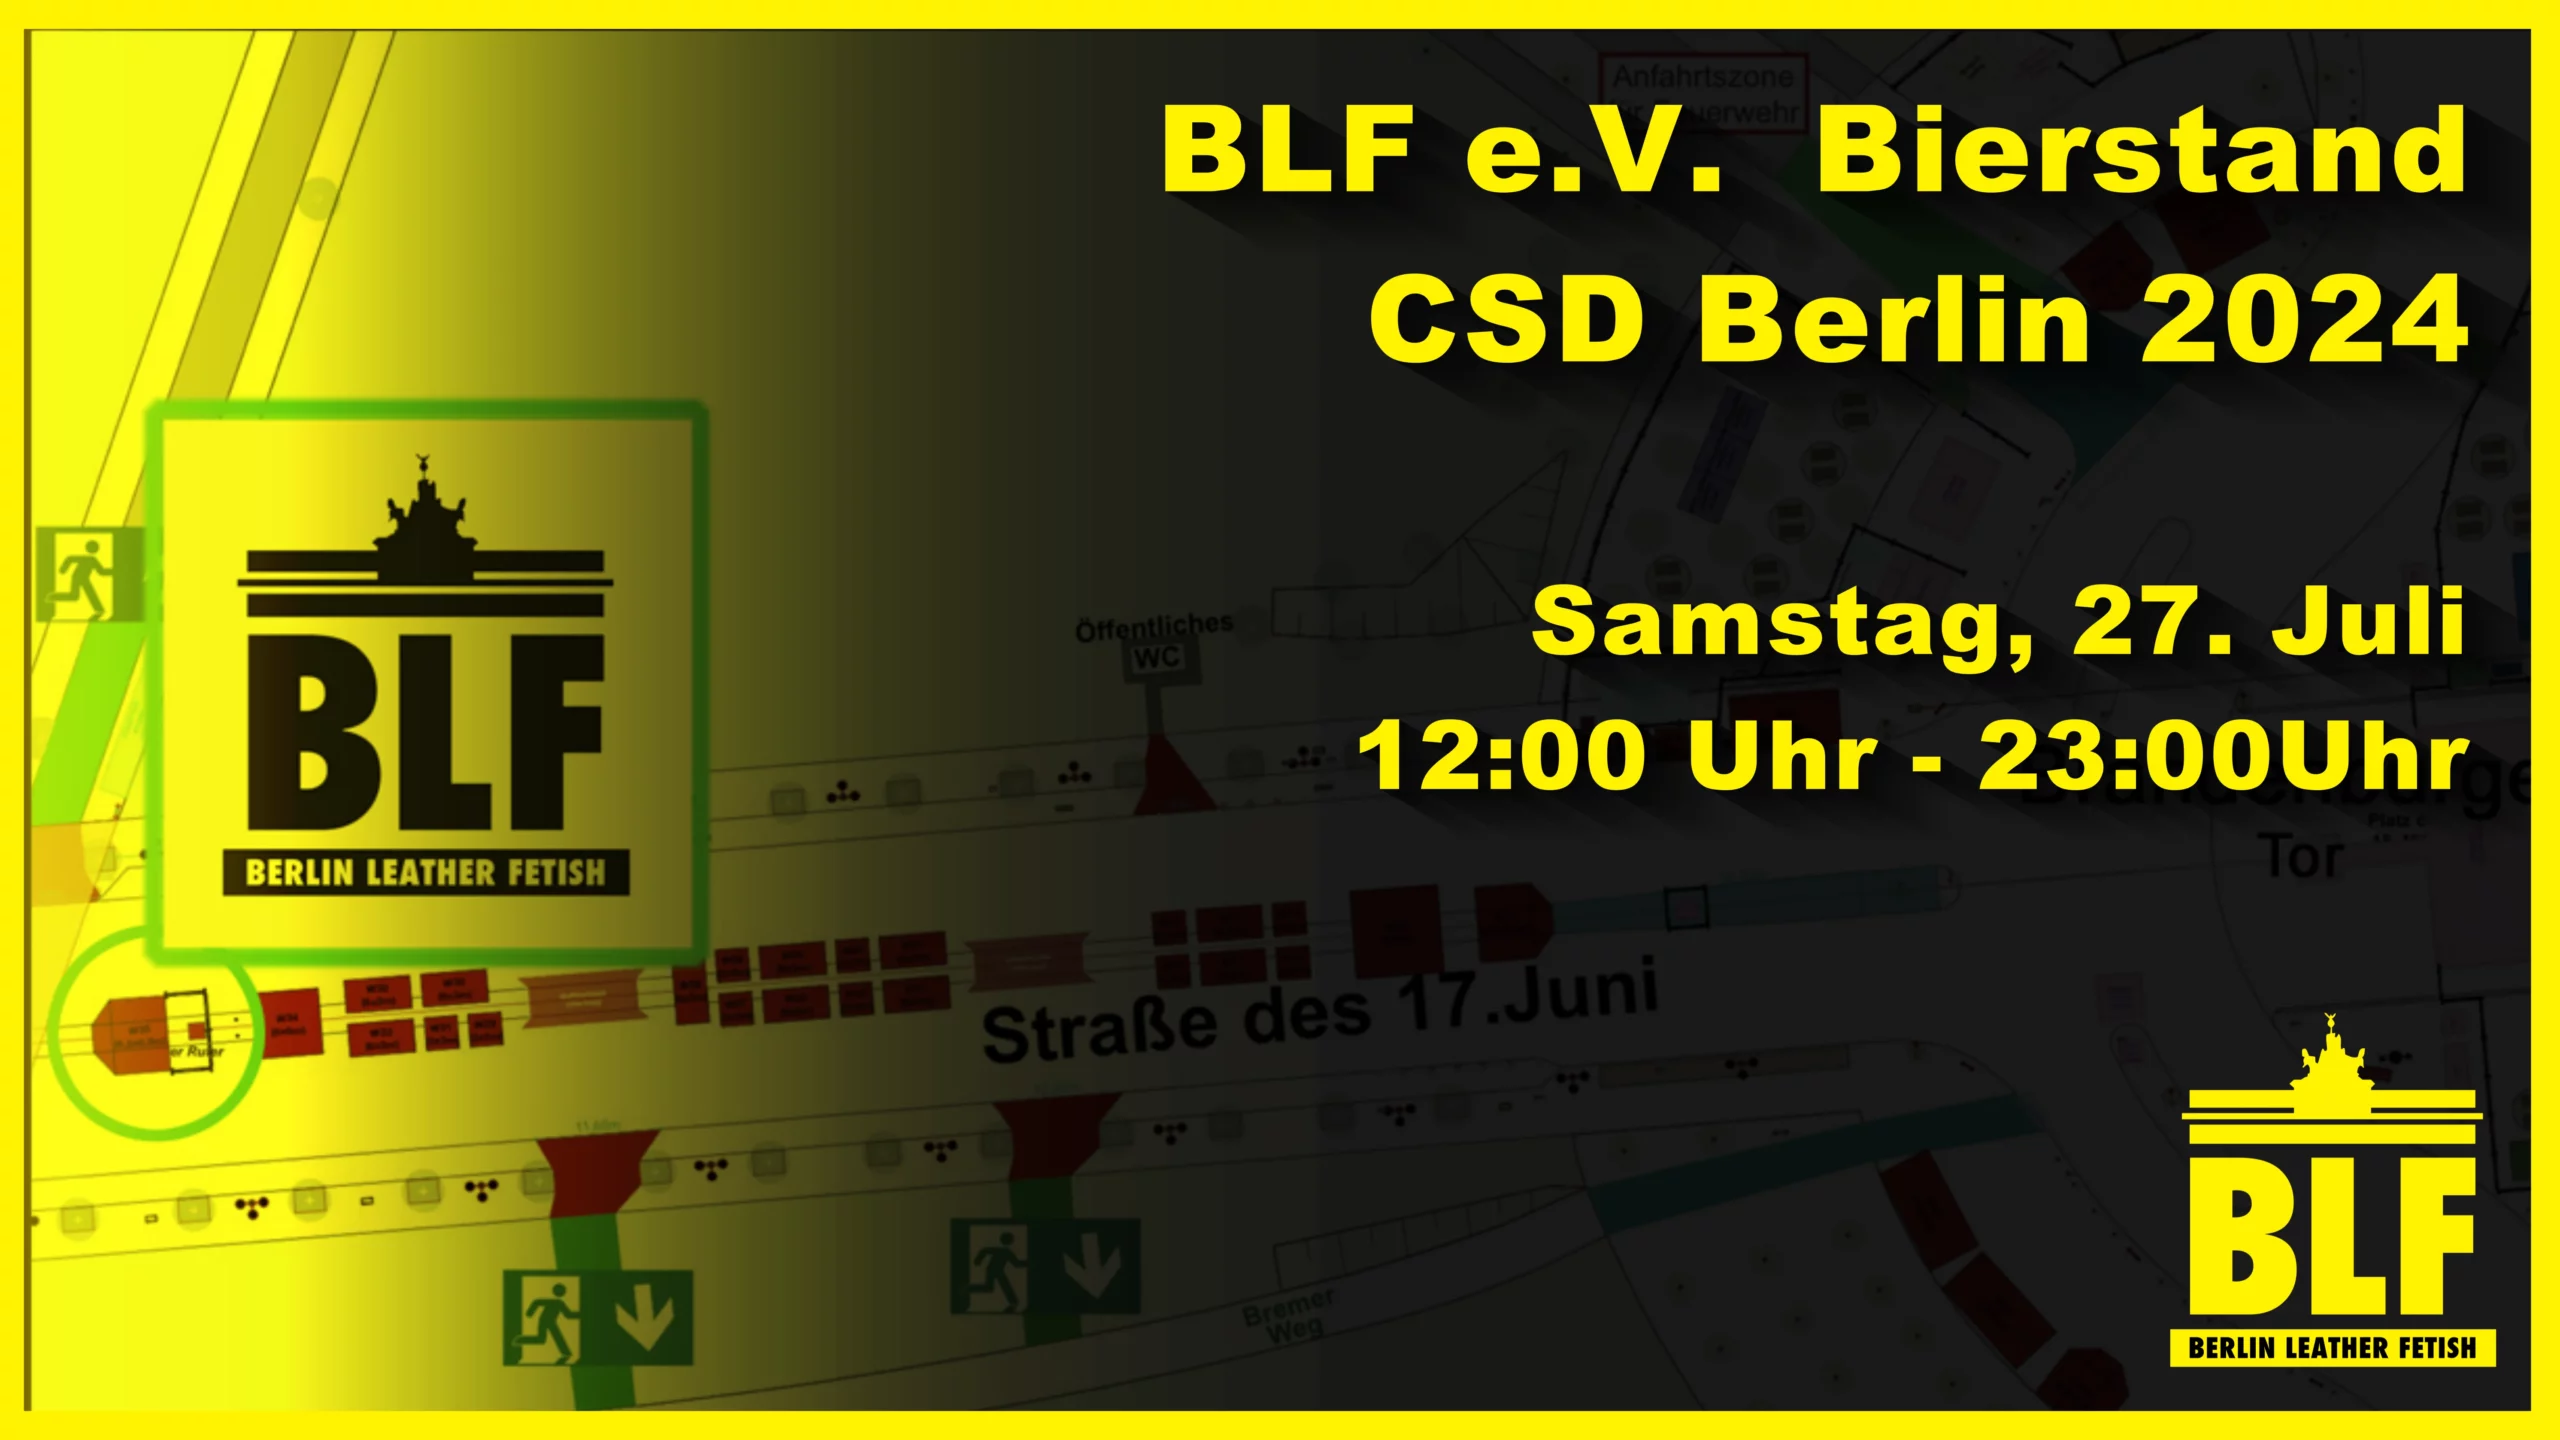 BLF e.V. Bierstand CSD Berlin 2024 Samstag, 27. Juli 12:00 Uhr - 23:00Uhr